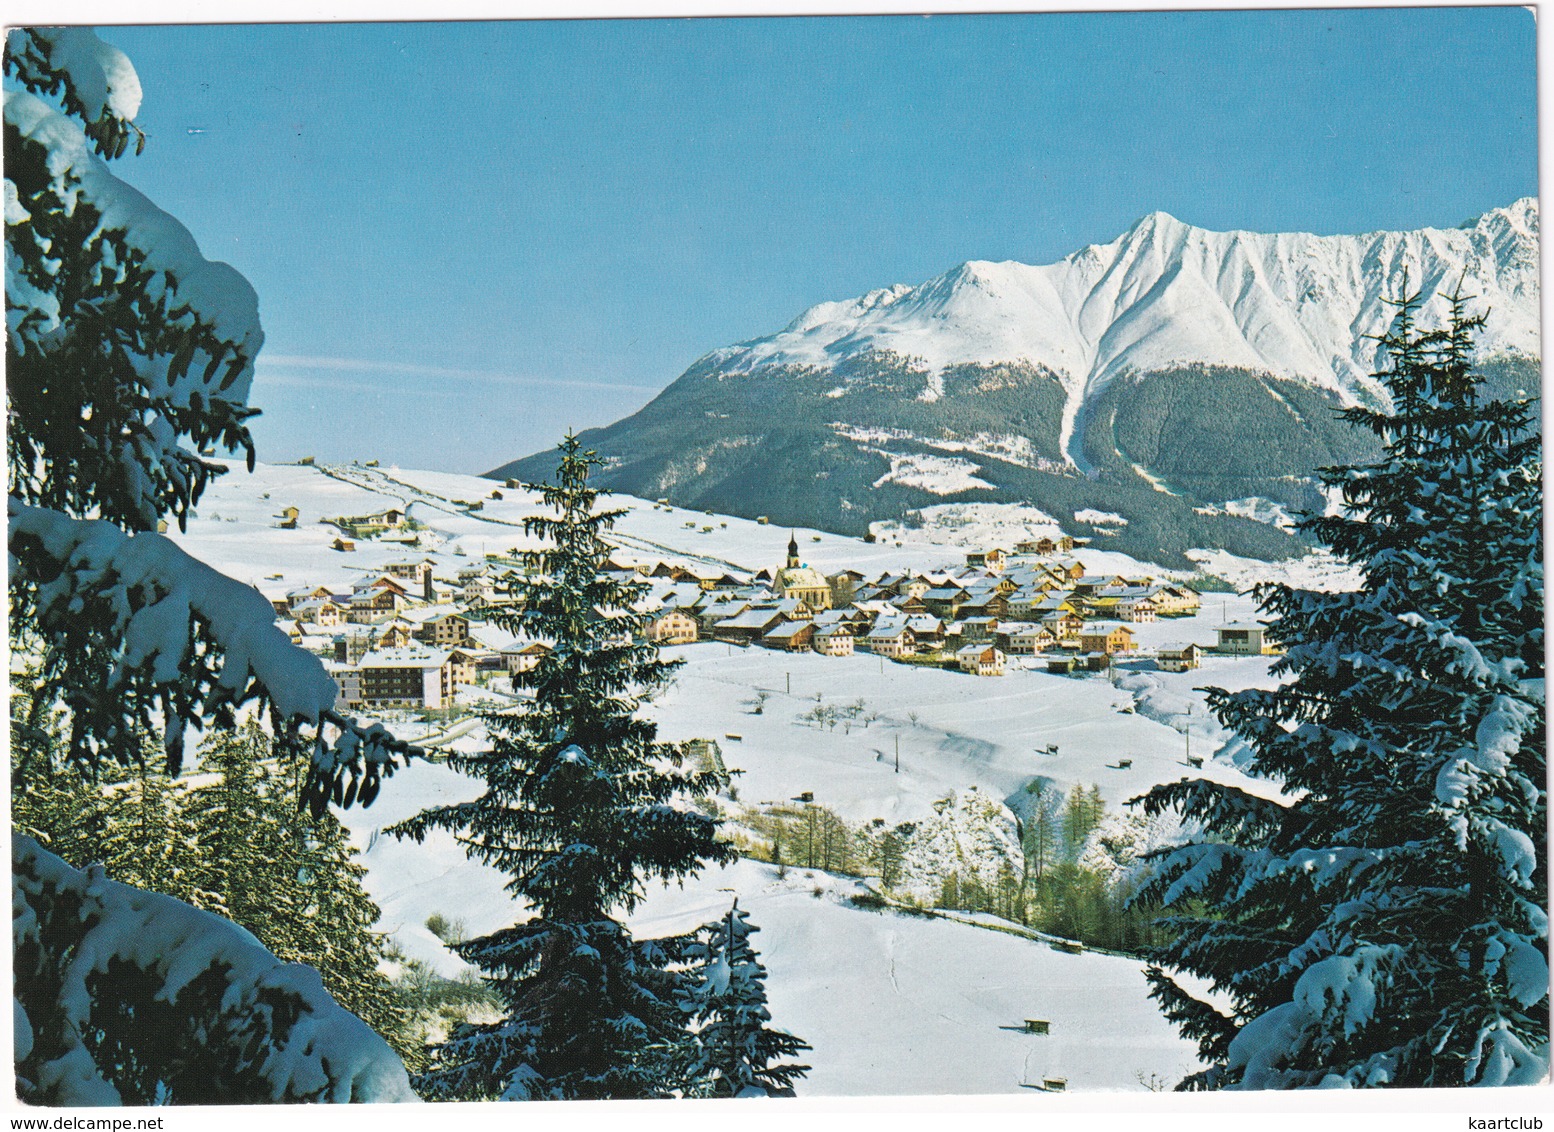 Fiss, 1436 M - Oberinntal, Tirol - (Winter) - Landeck